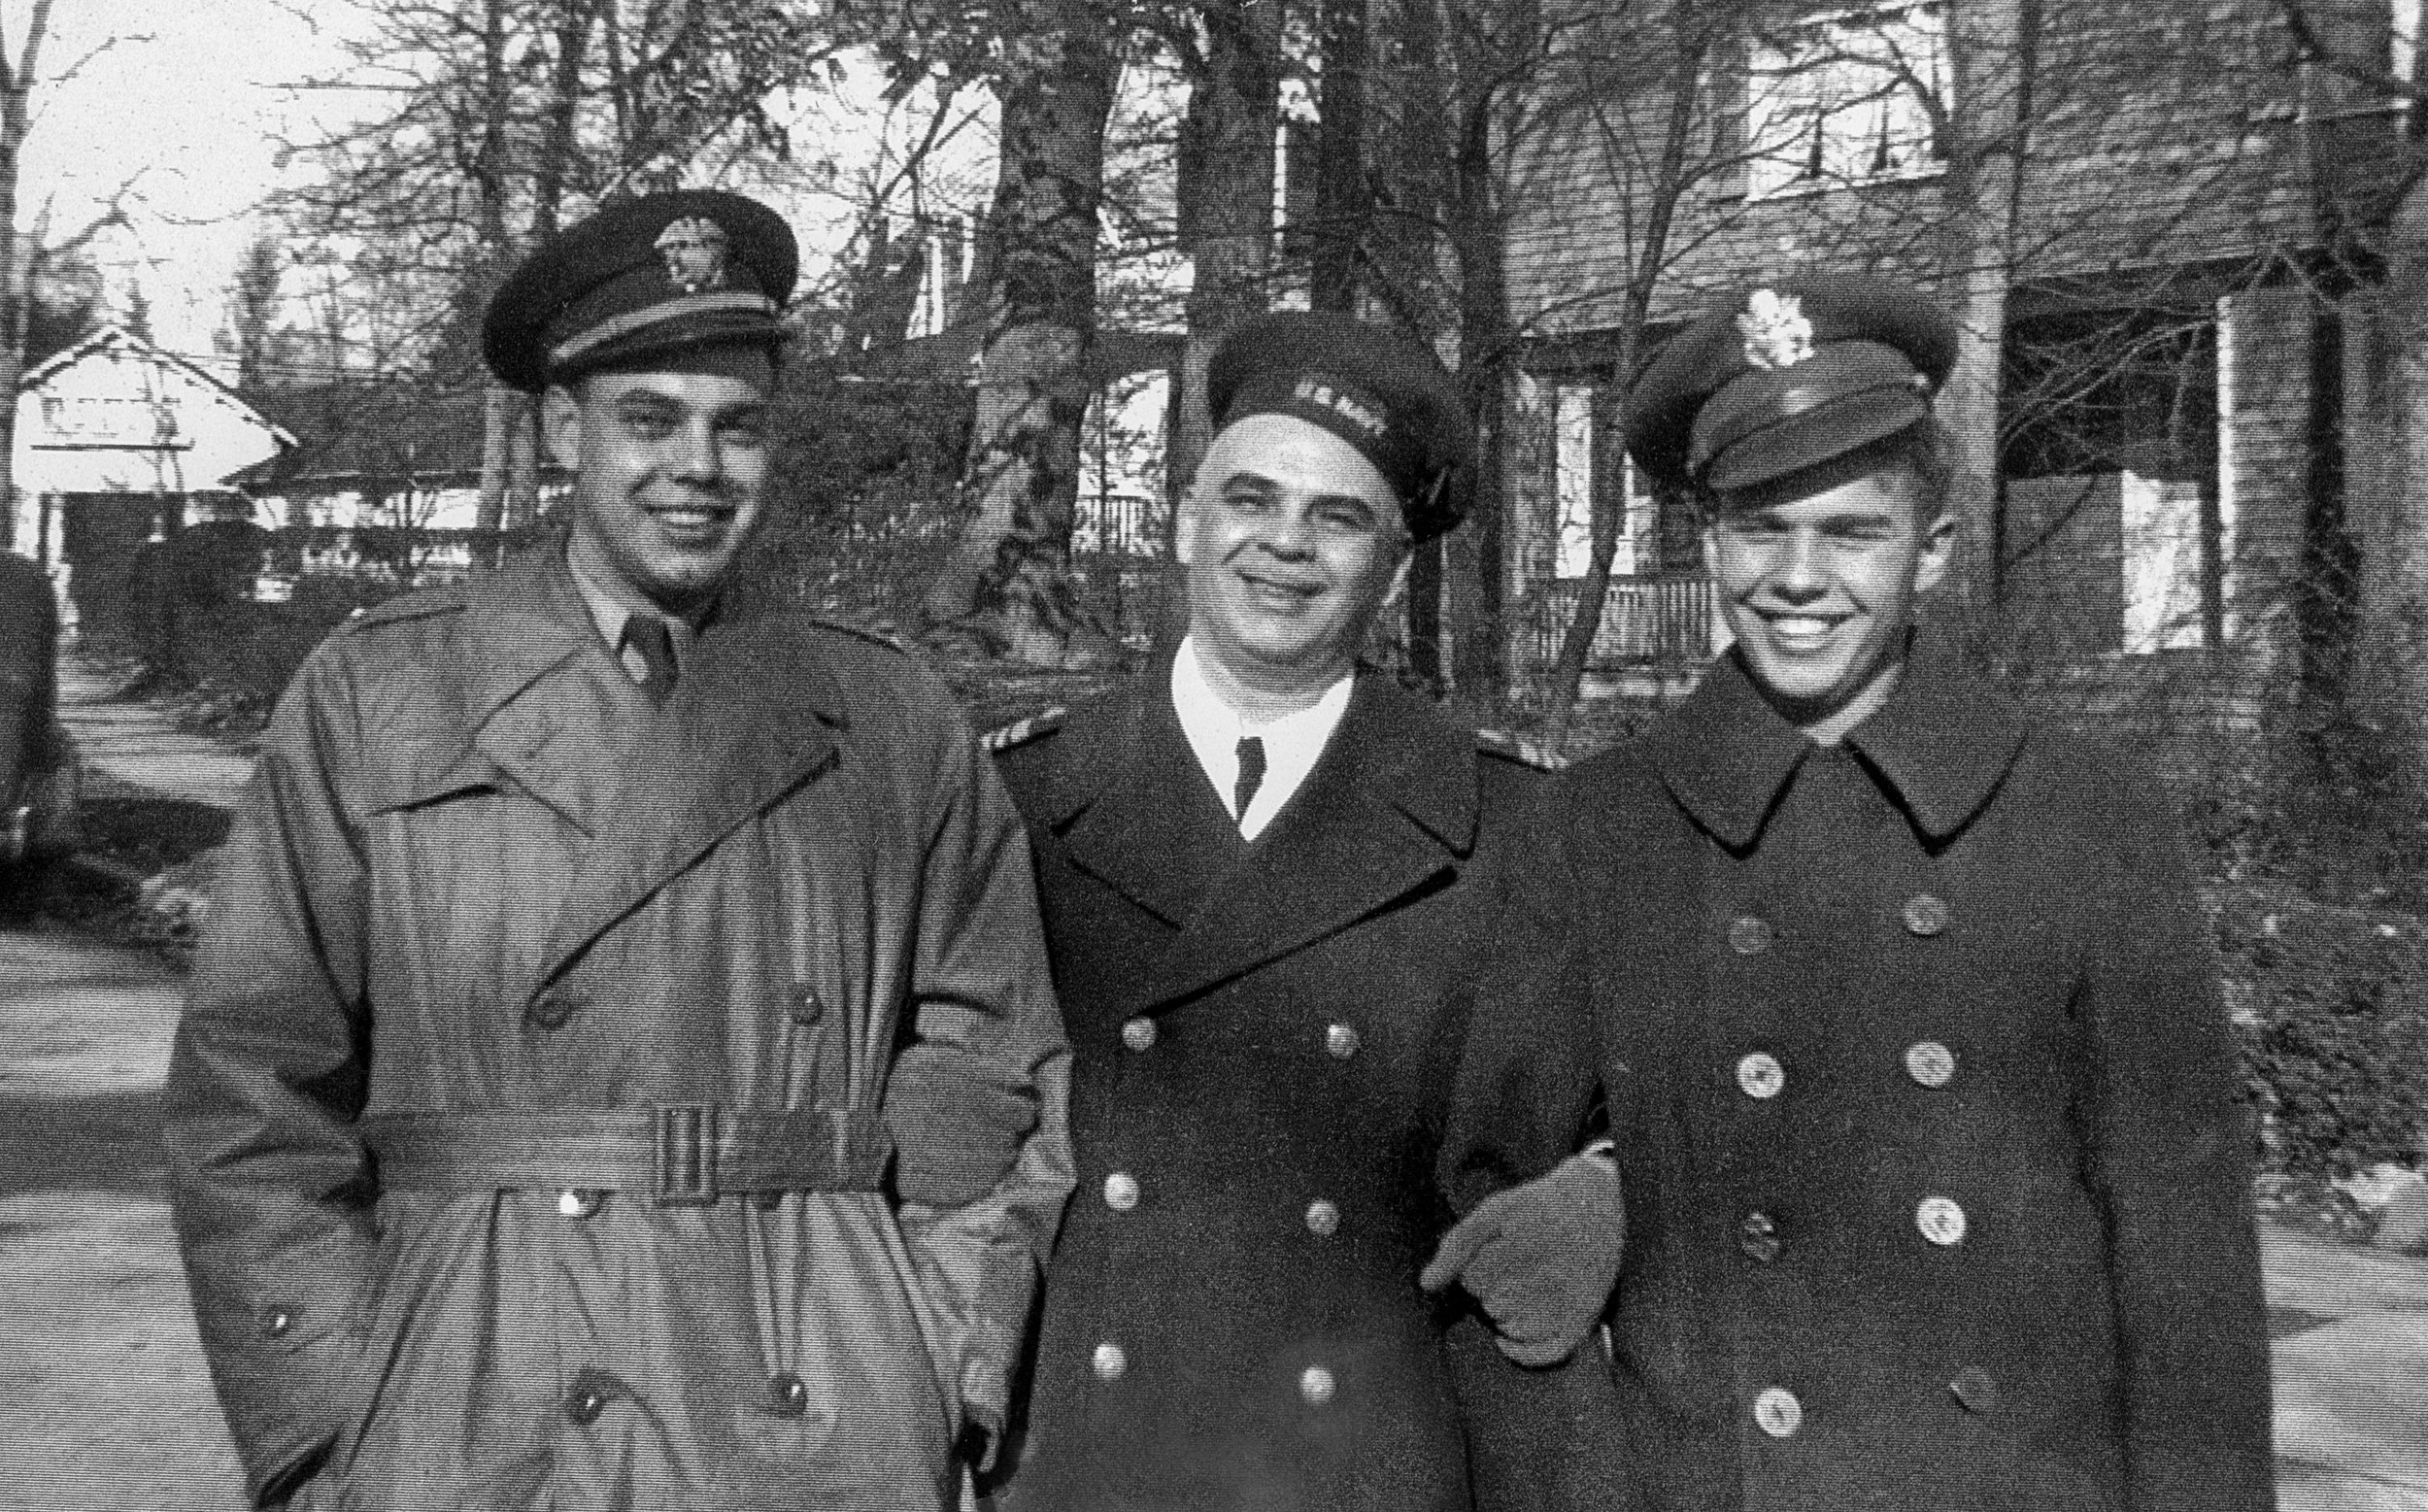 Doug, Harry and Buddy, 1944